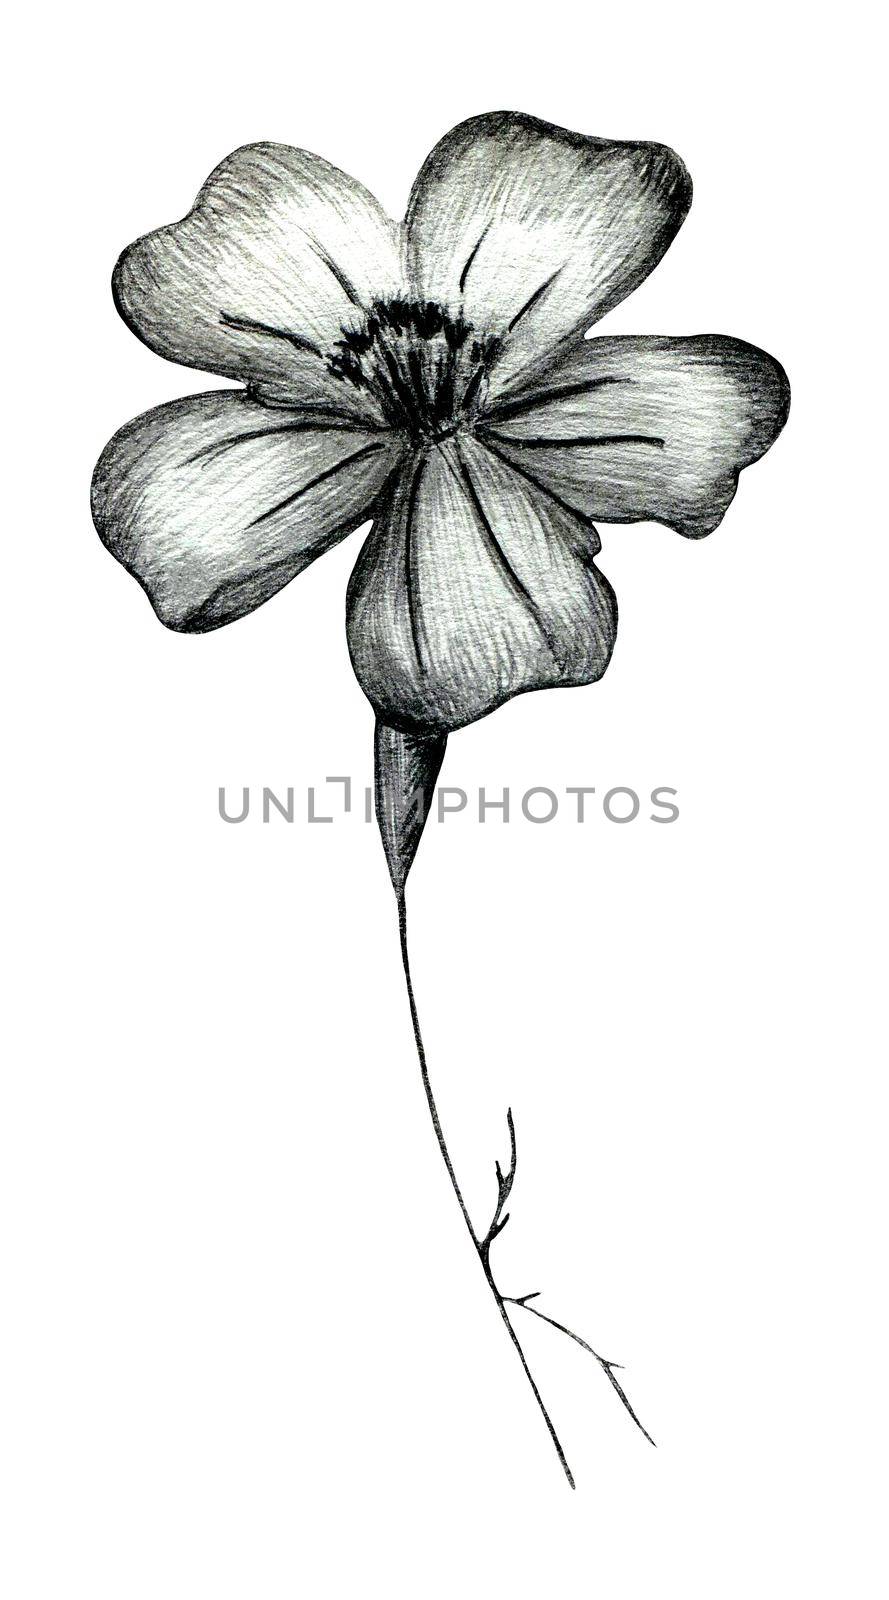 Black and White Hand Drawn Marigold Flower Isolated on White Background. by Rina_Dozornaya